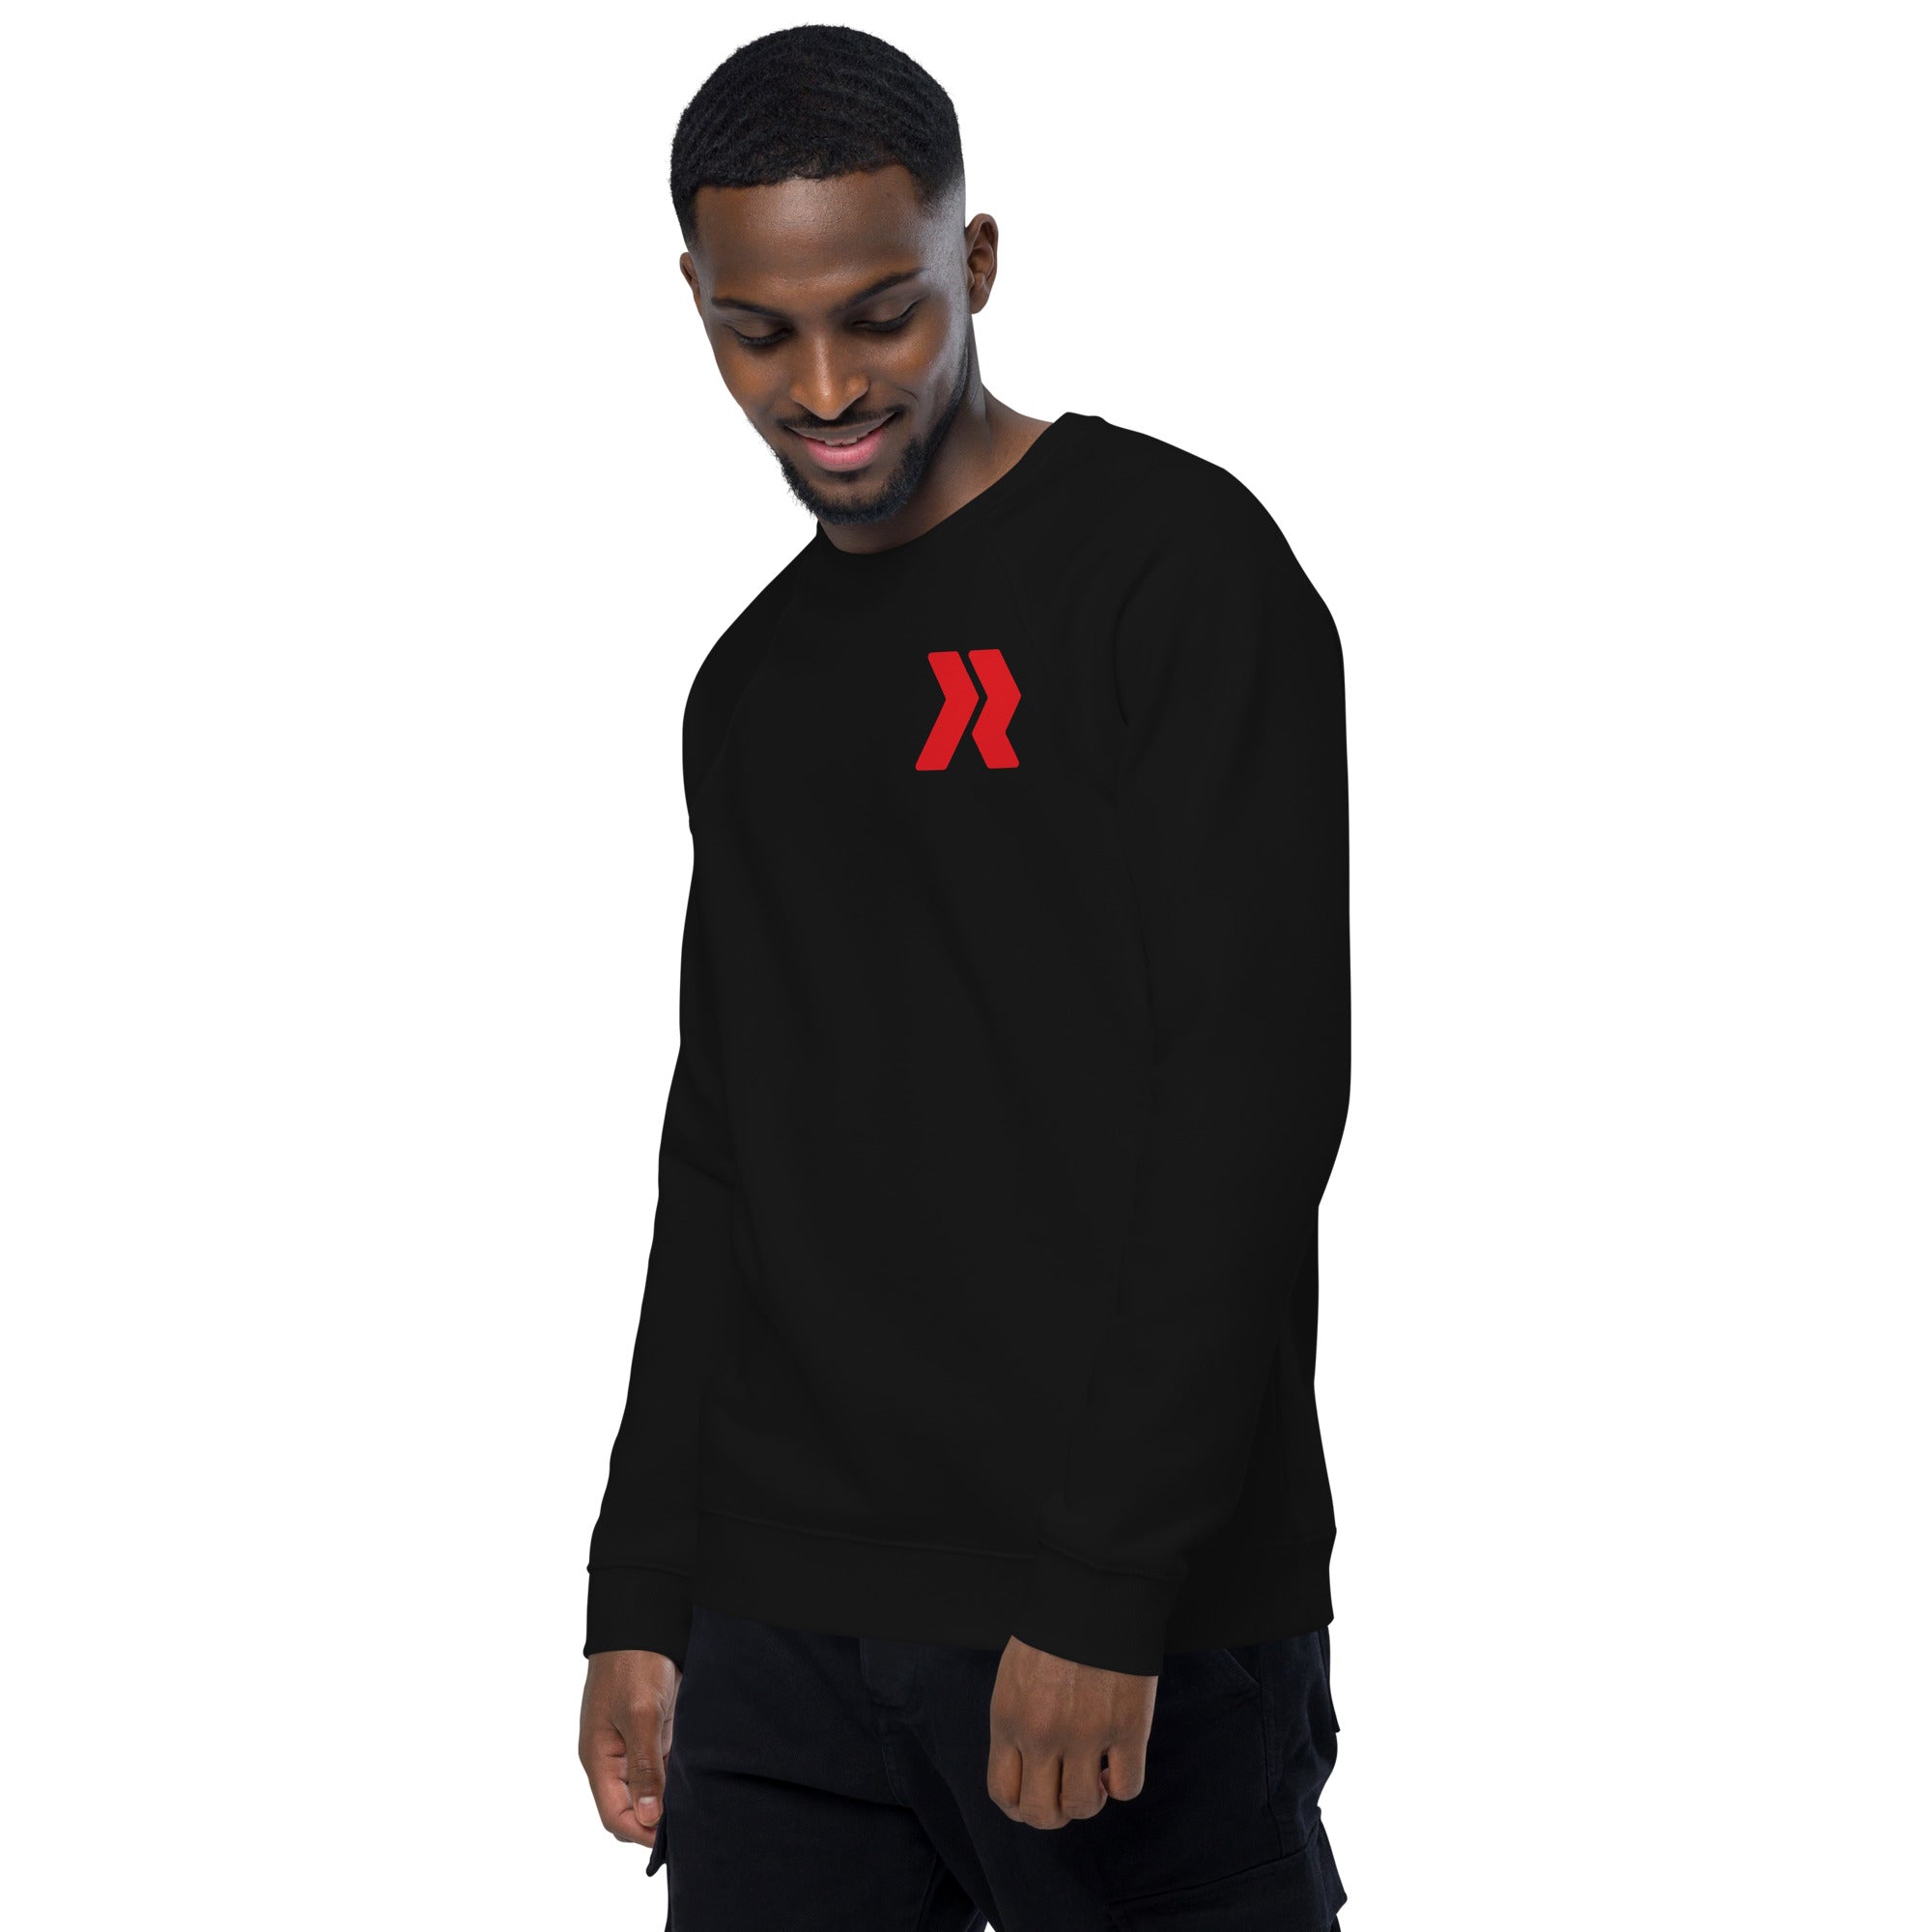 CB Logo R - R/W - Black Unisex organic raglan sweatshirt